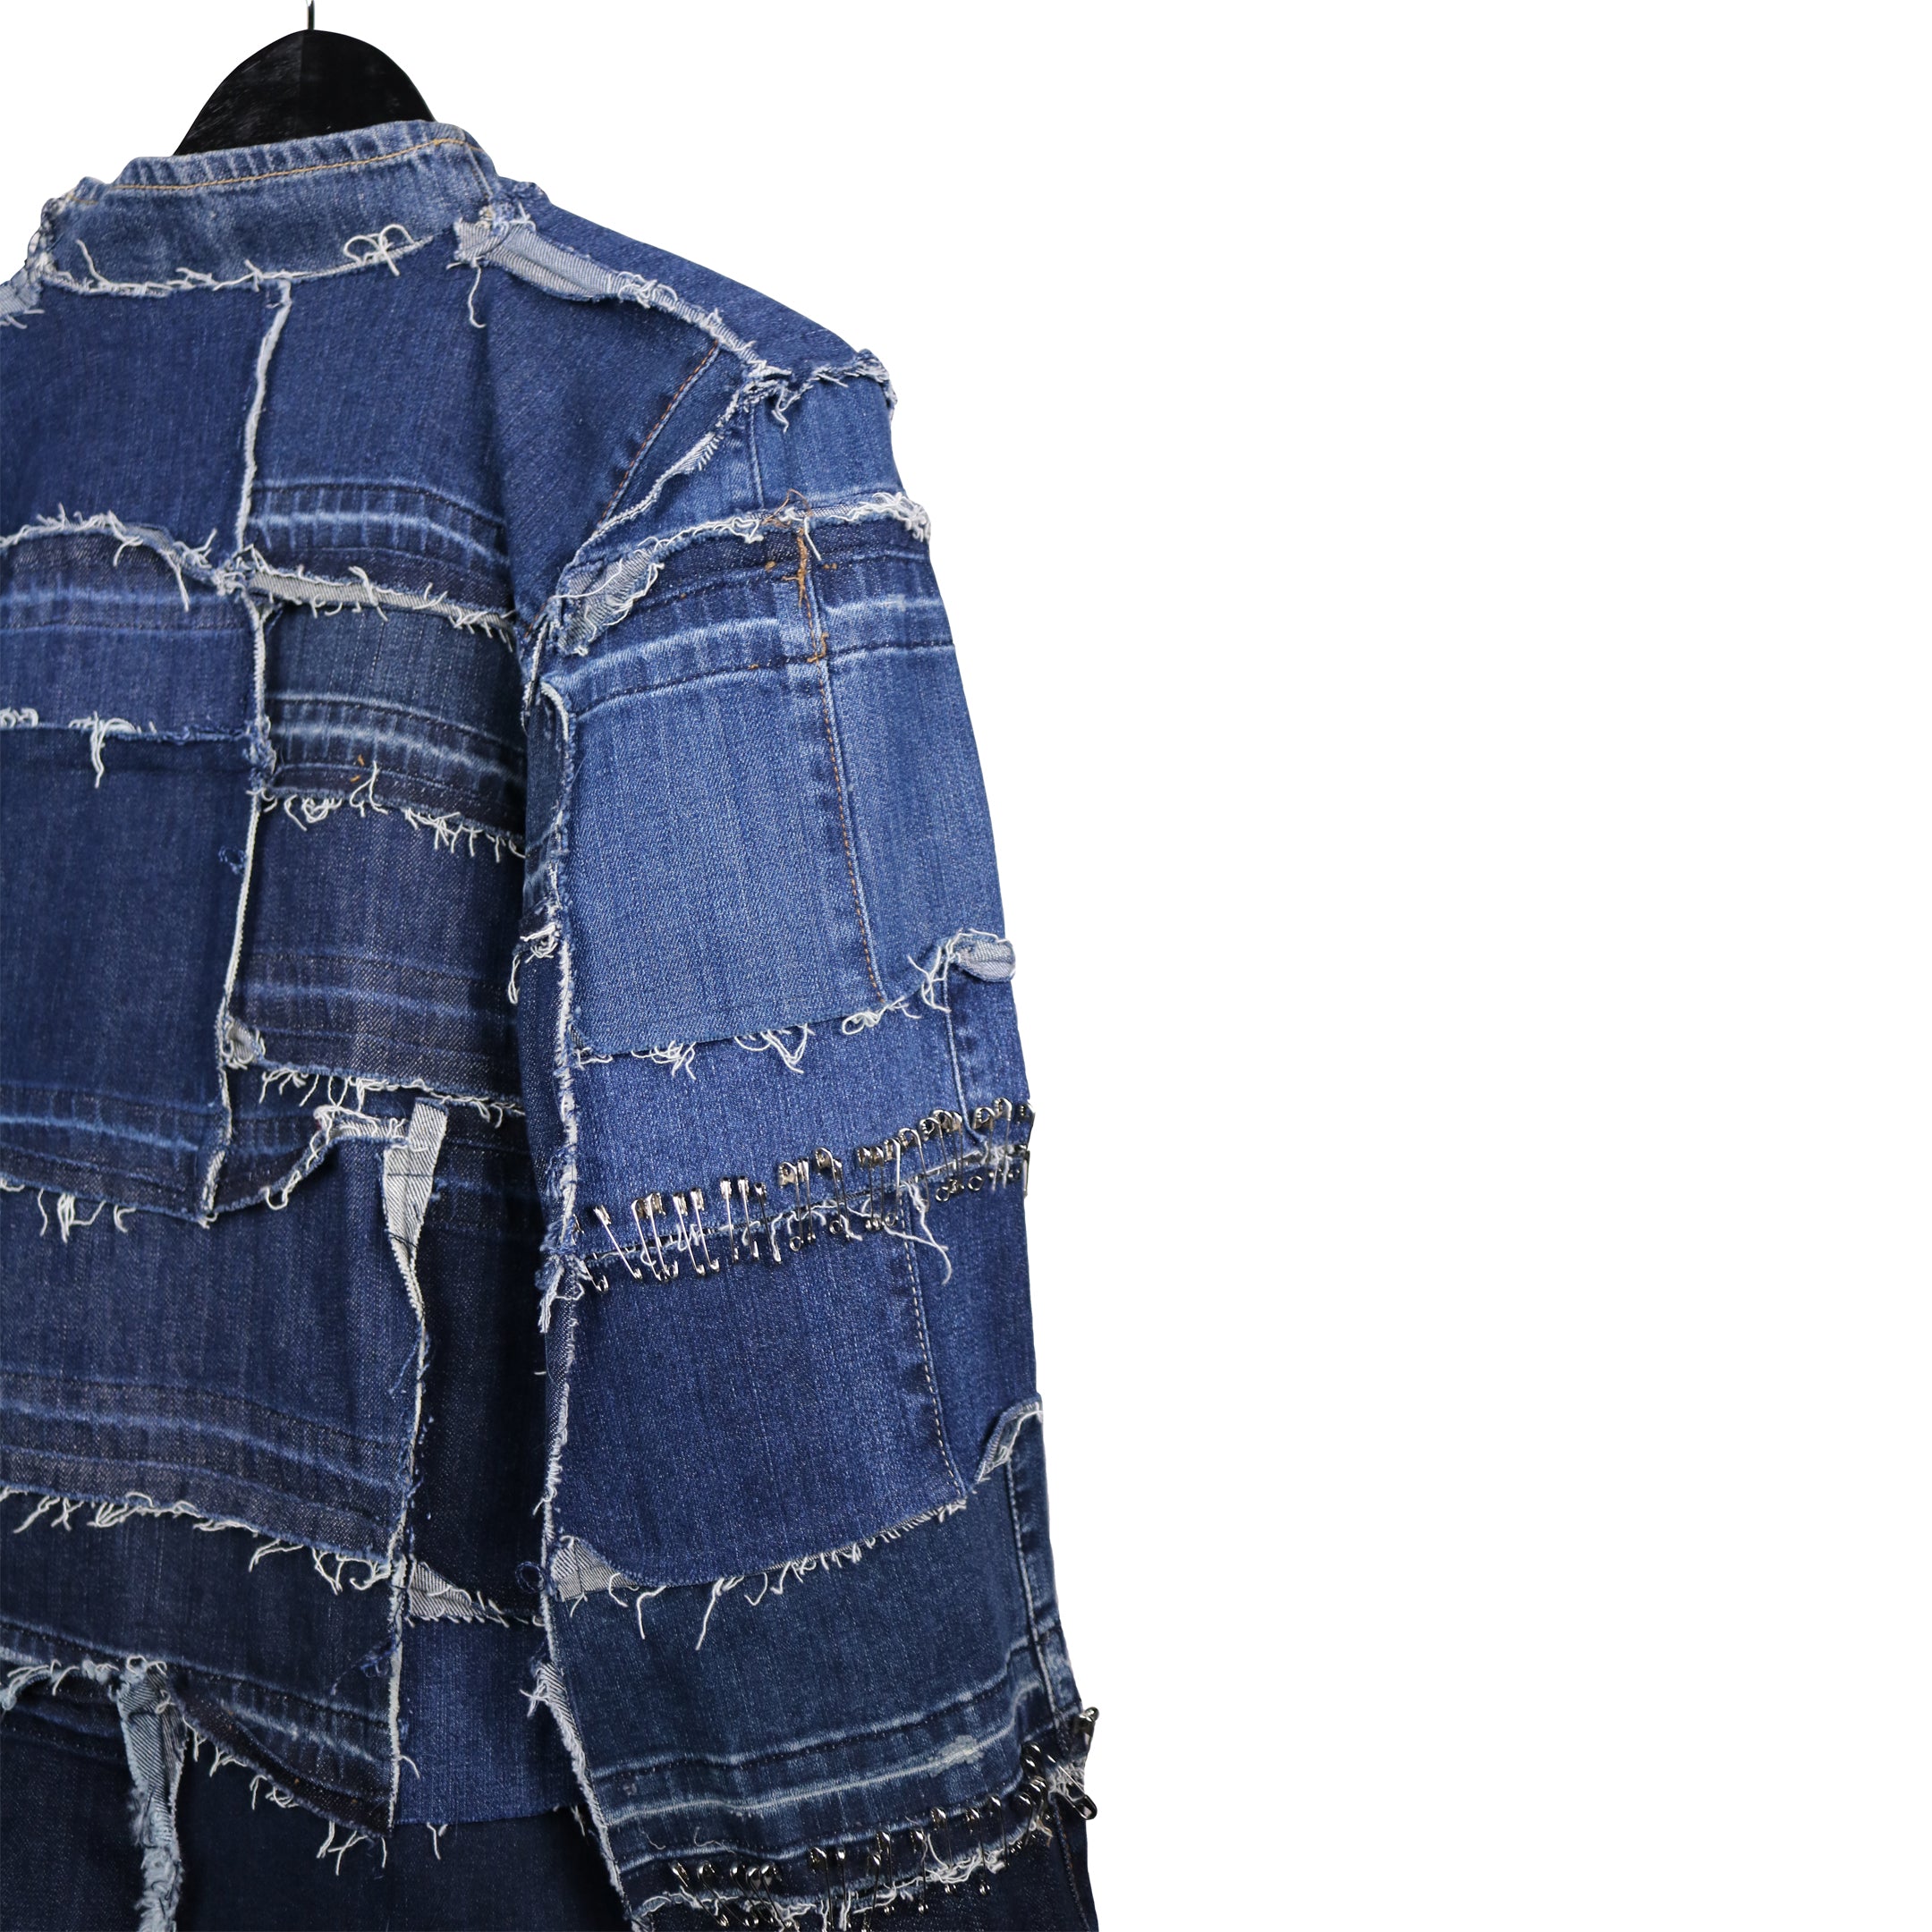 DIY short sleeve denim jacket - Lisa Leonard Designs Blog